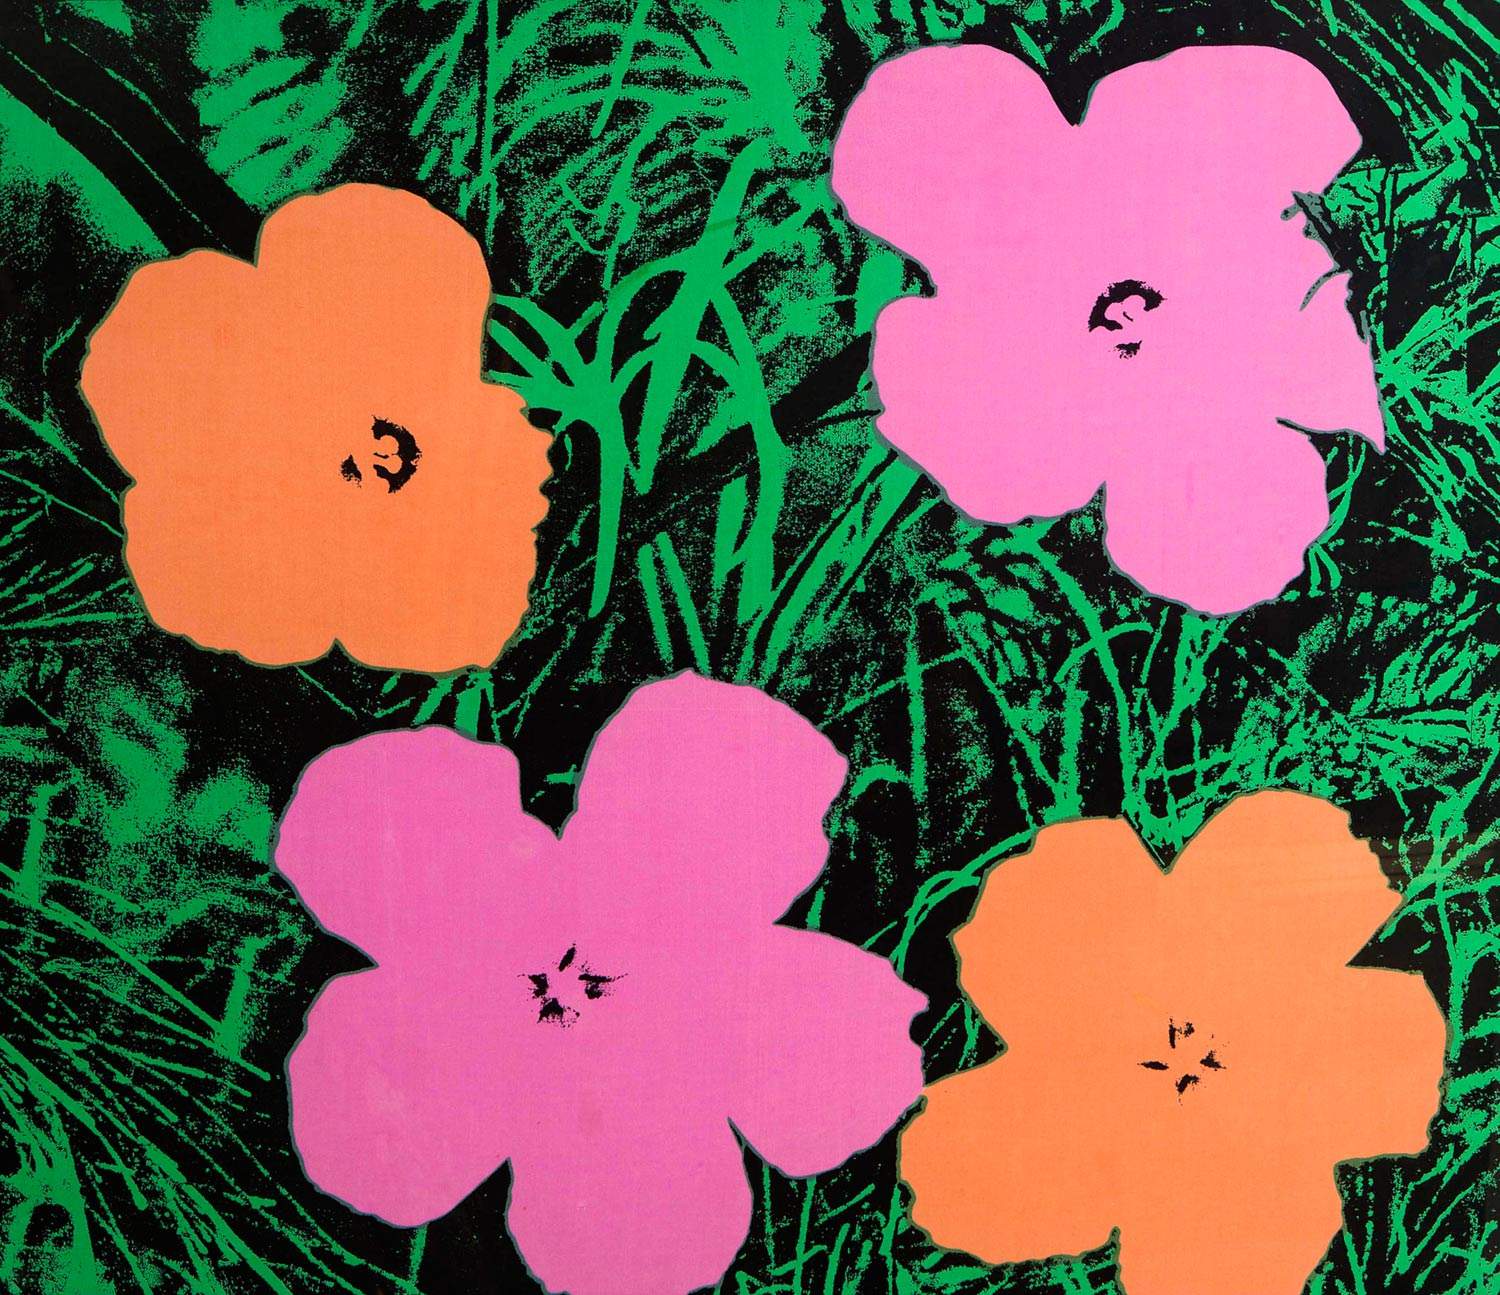 Milano, alla Fabbrica del Vapore la grande mostra su Andy Warhol